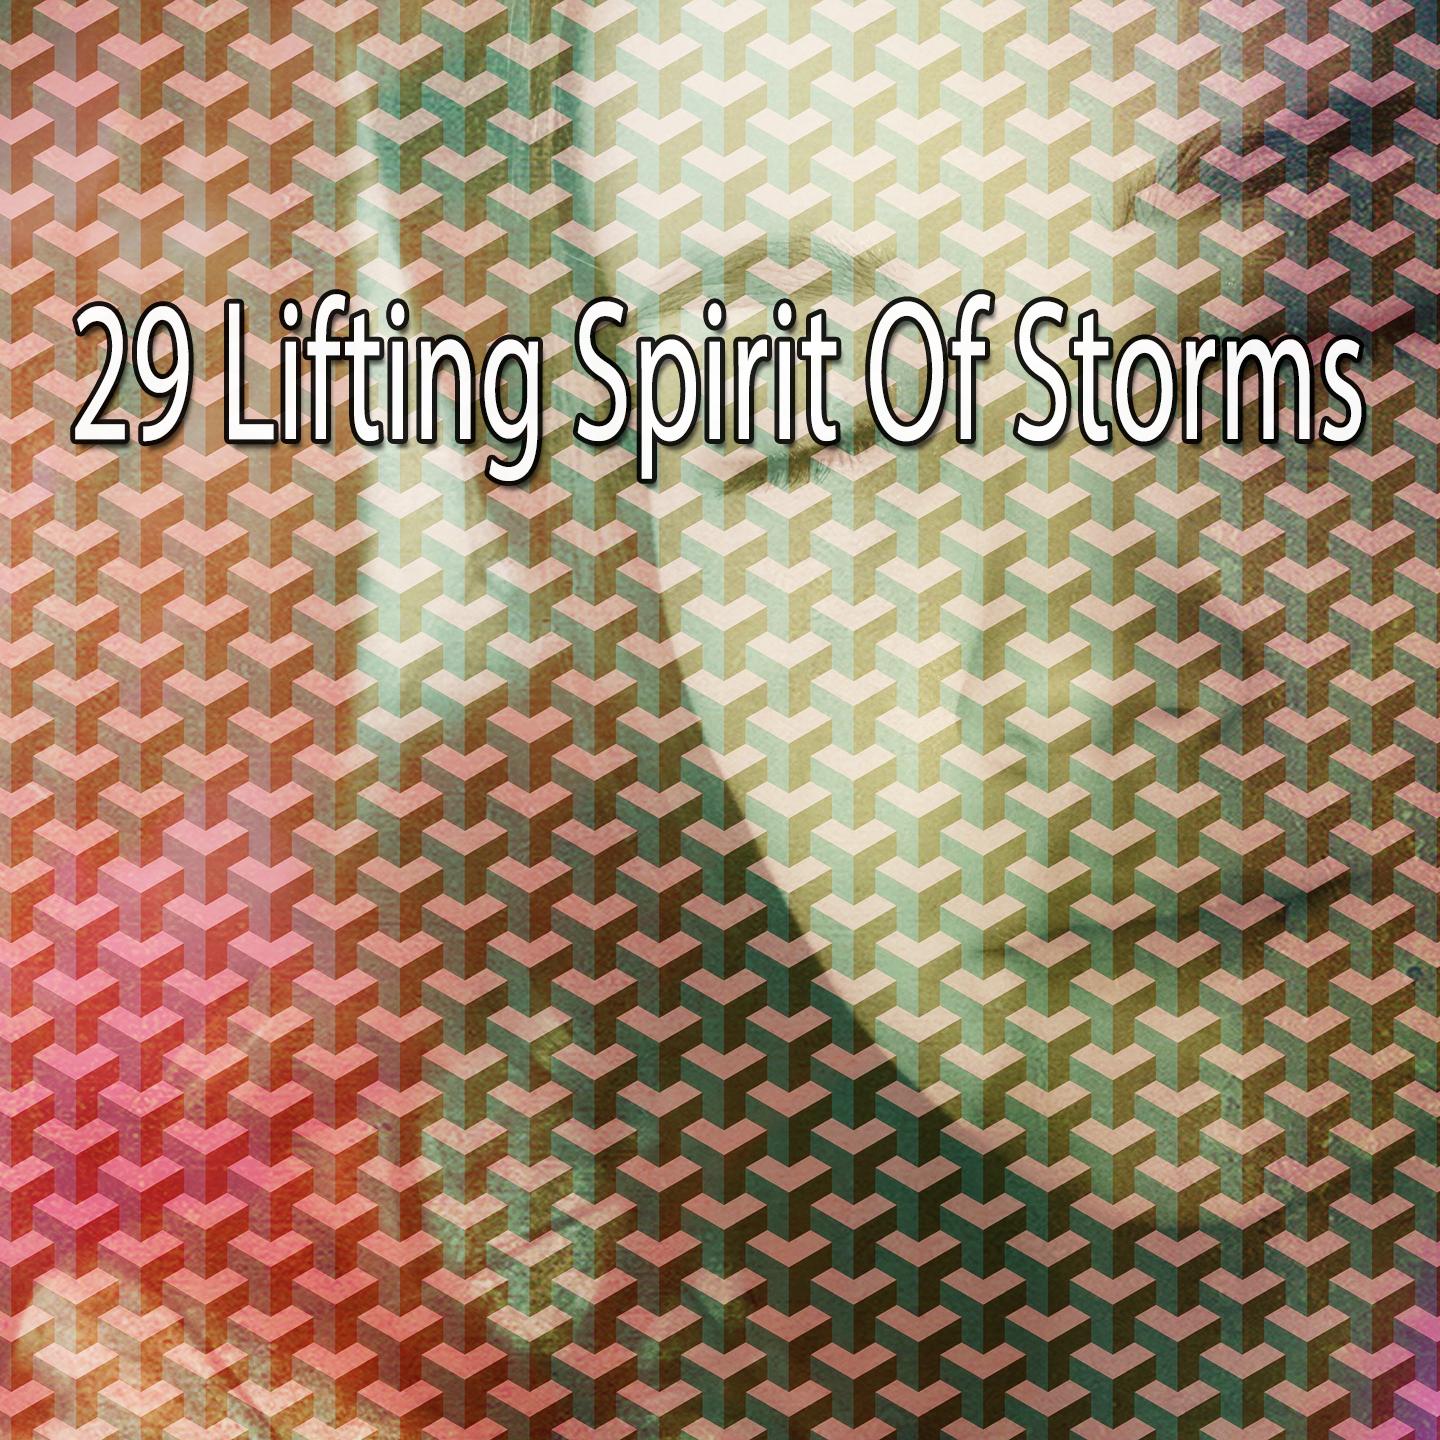 29 Lifting Spirit of Storms